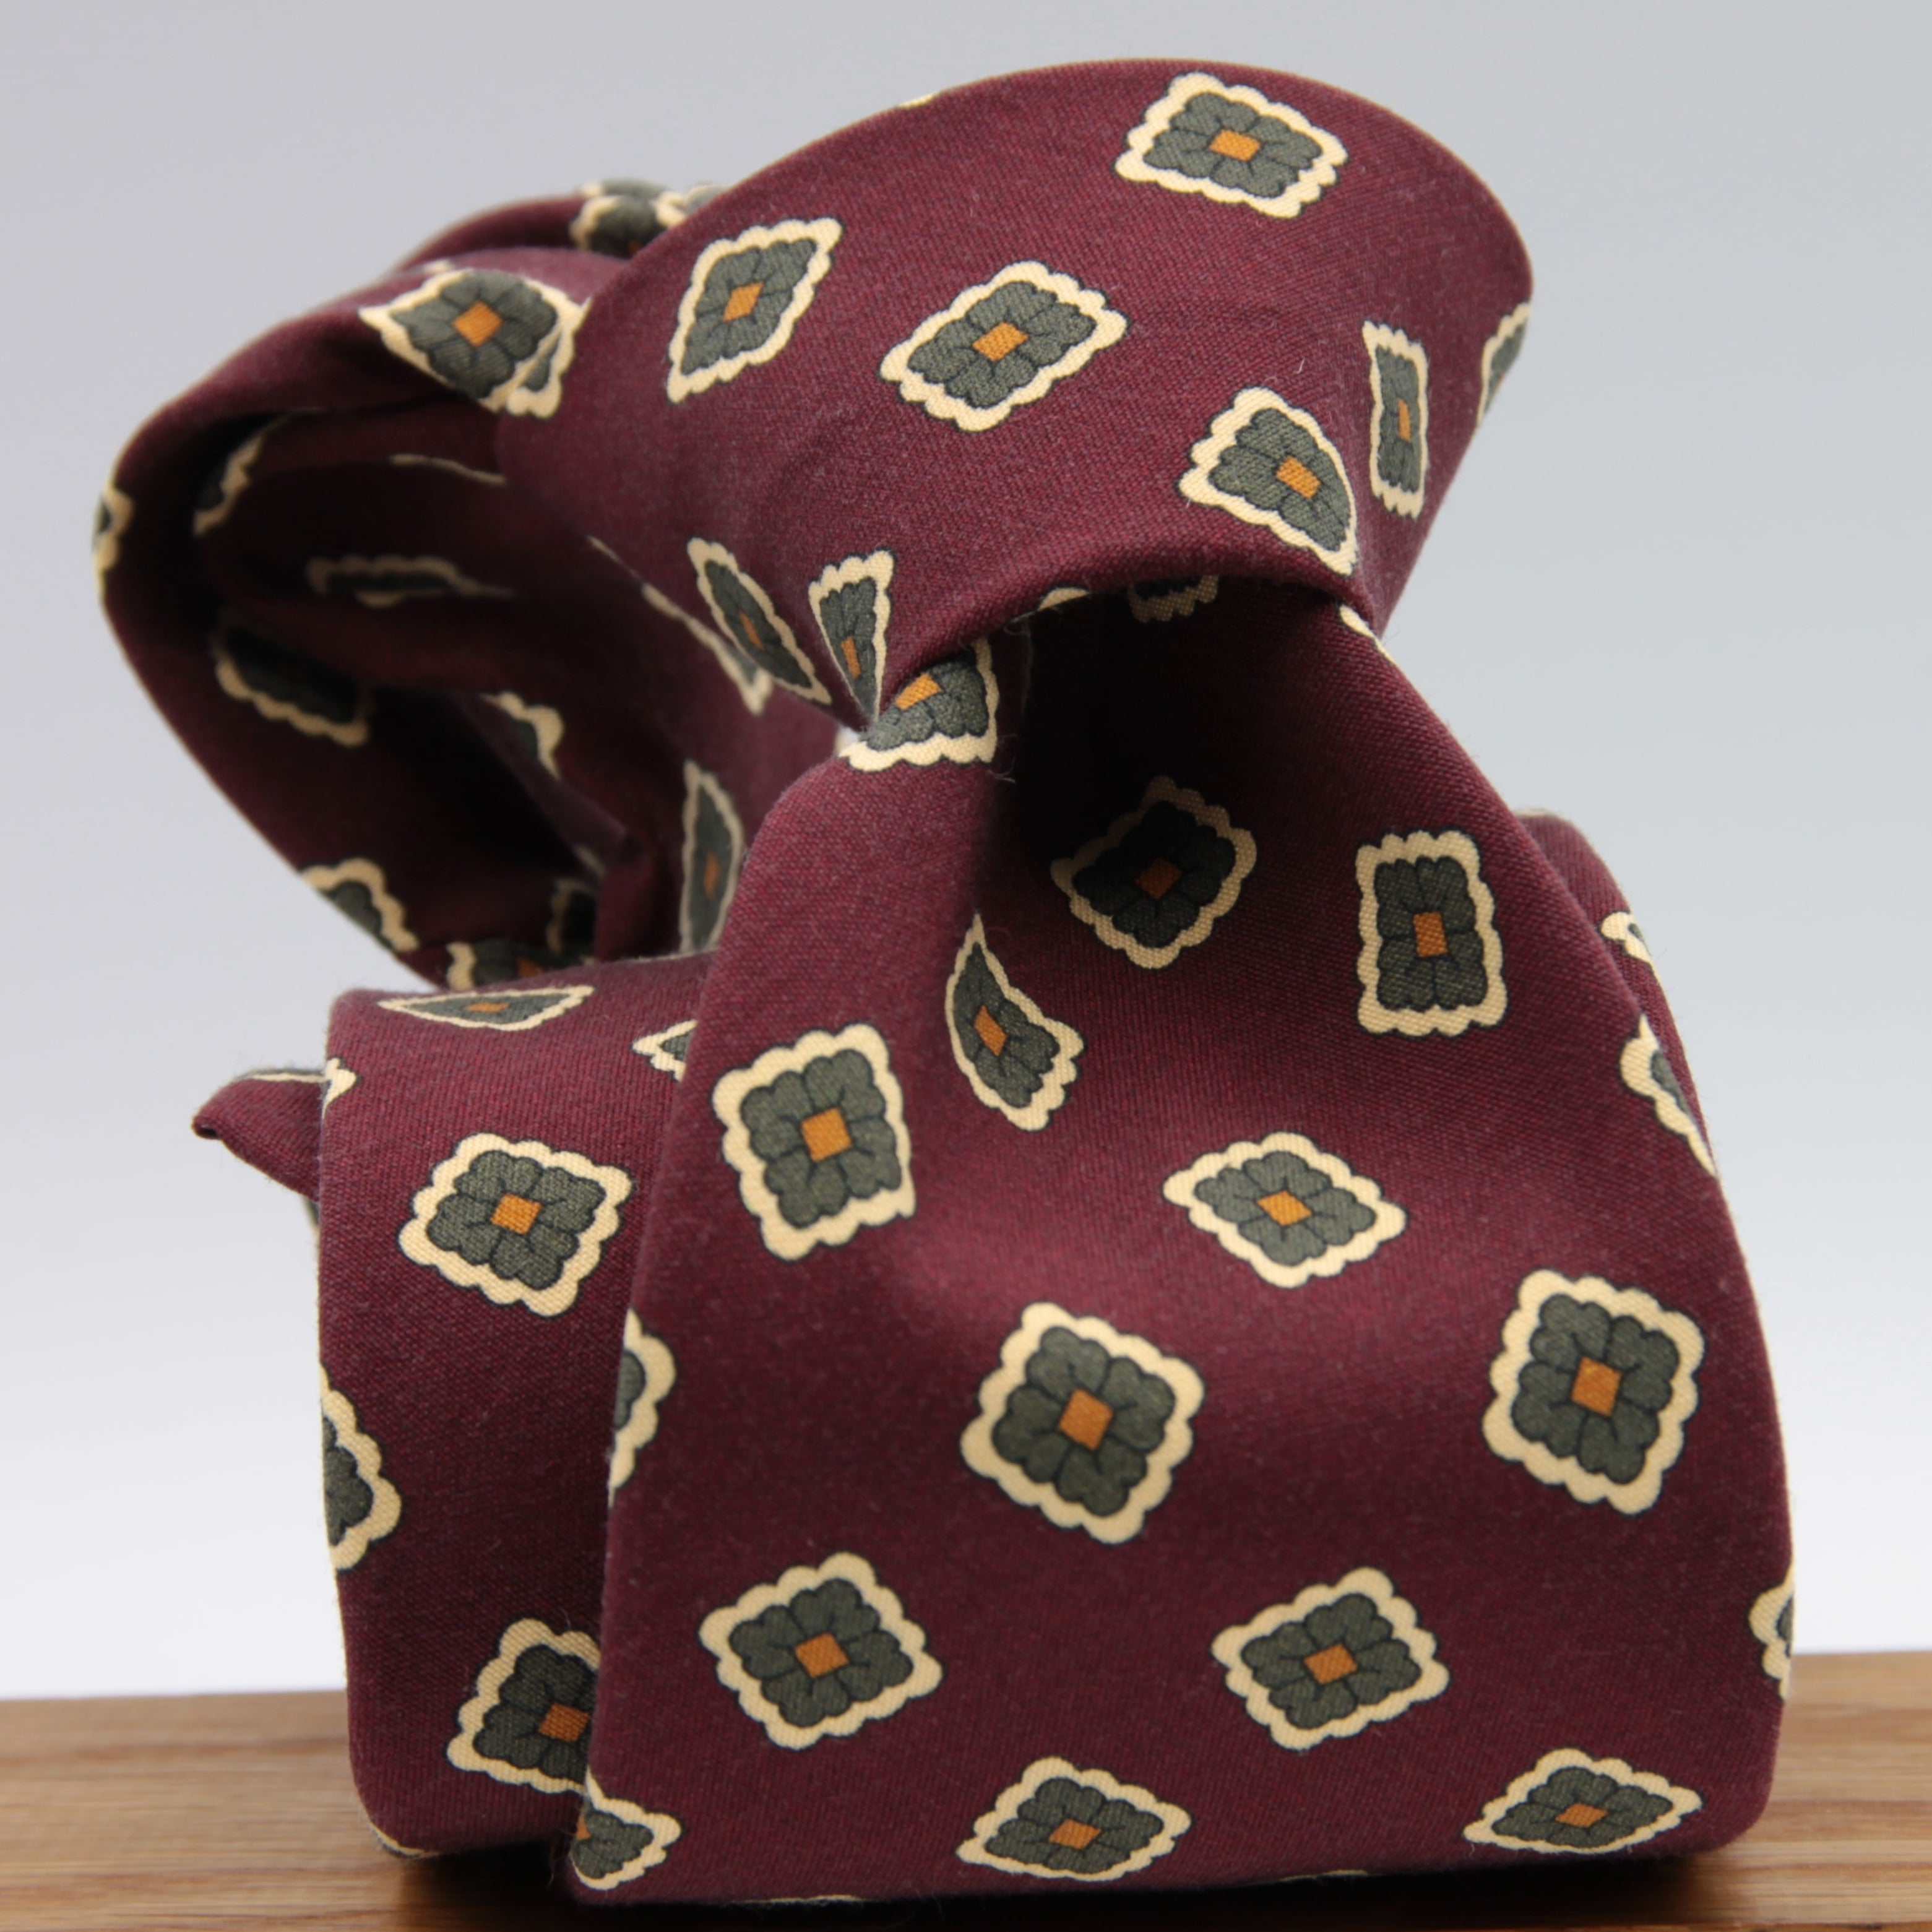 Cruciani & Bella 100% Printed Madder Silk  Italian fabric Unlined tie Red, Cream, Green and Orange Motifs Tie Handmade in Italy 8 cm x 150 cm #7615